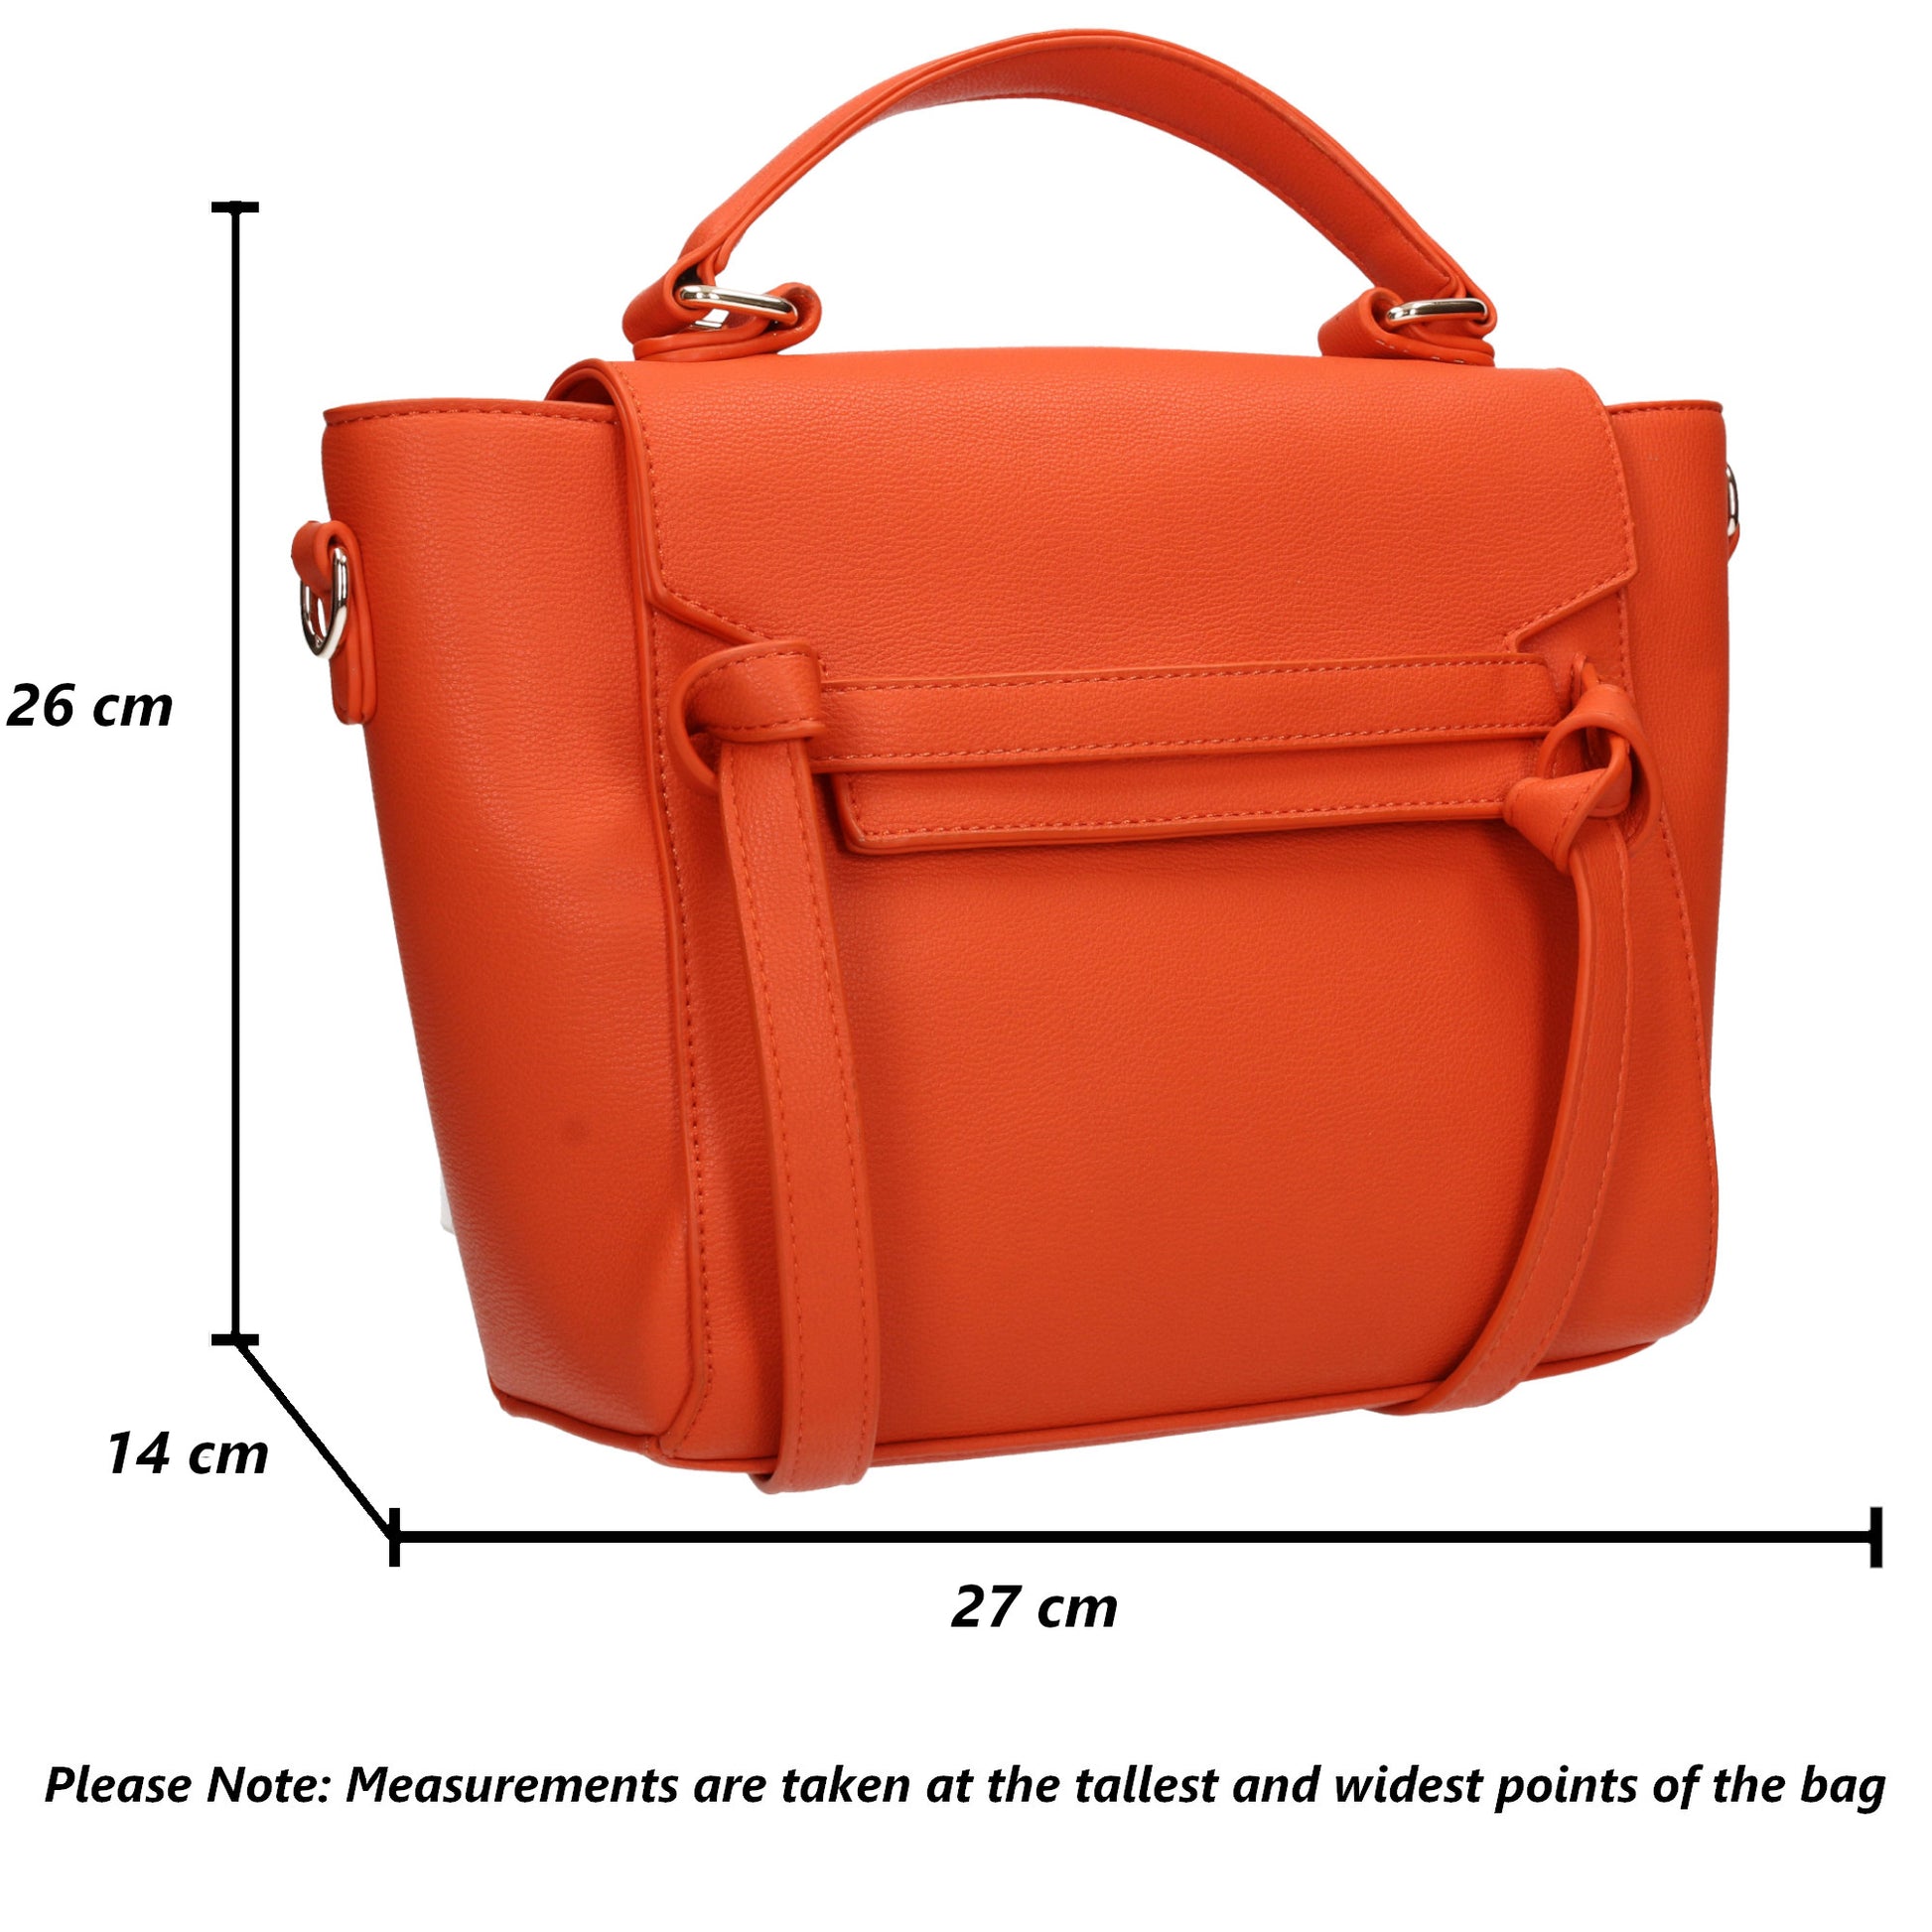 Buy your Juana Handbag Orange Today! Buy with confidence from Swankyswans